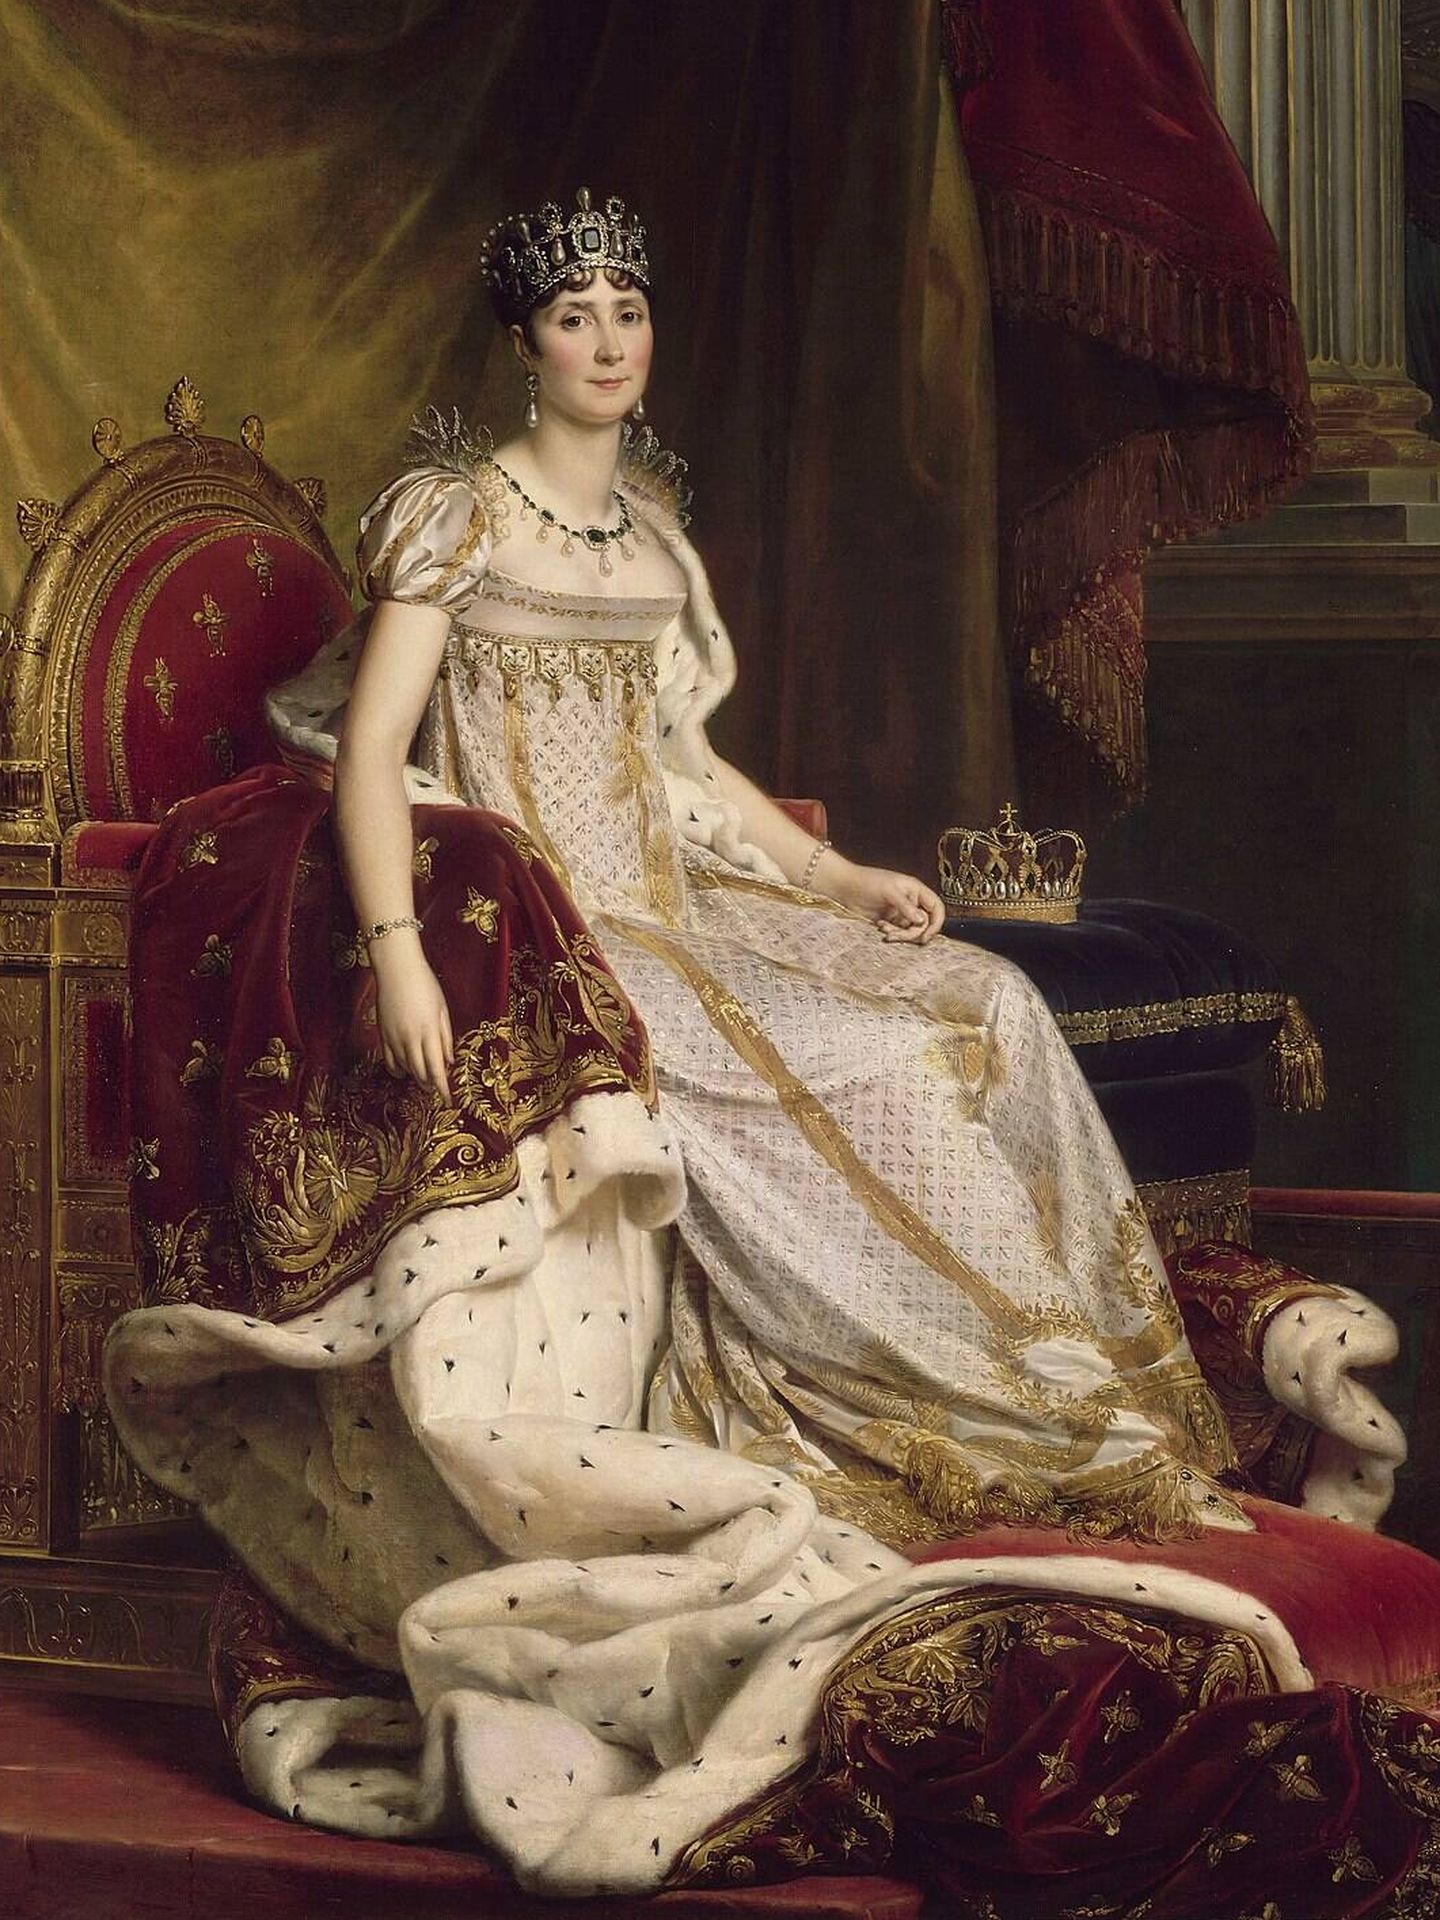 Retrato de Josefina, realizado por el Barón François Gérard